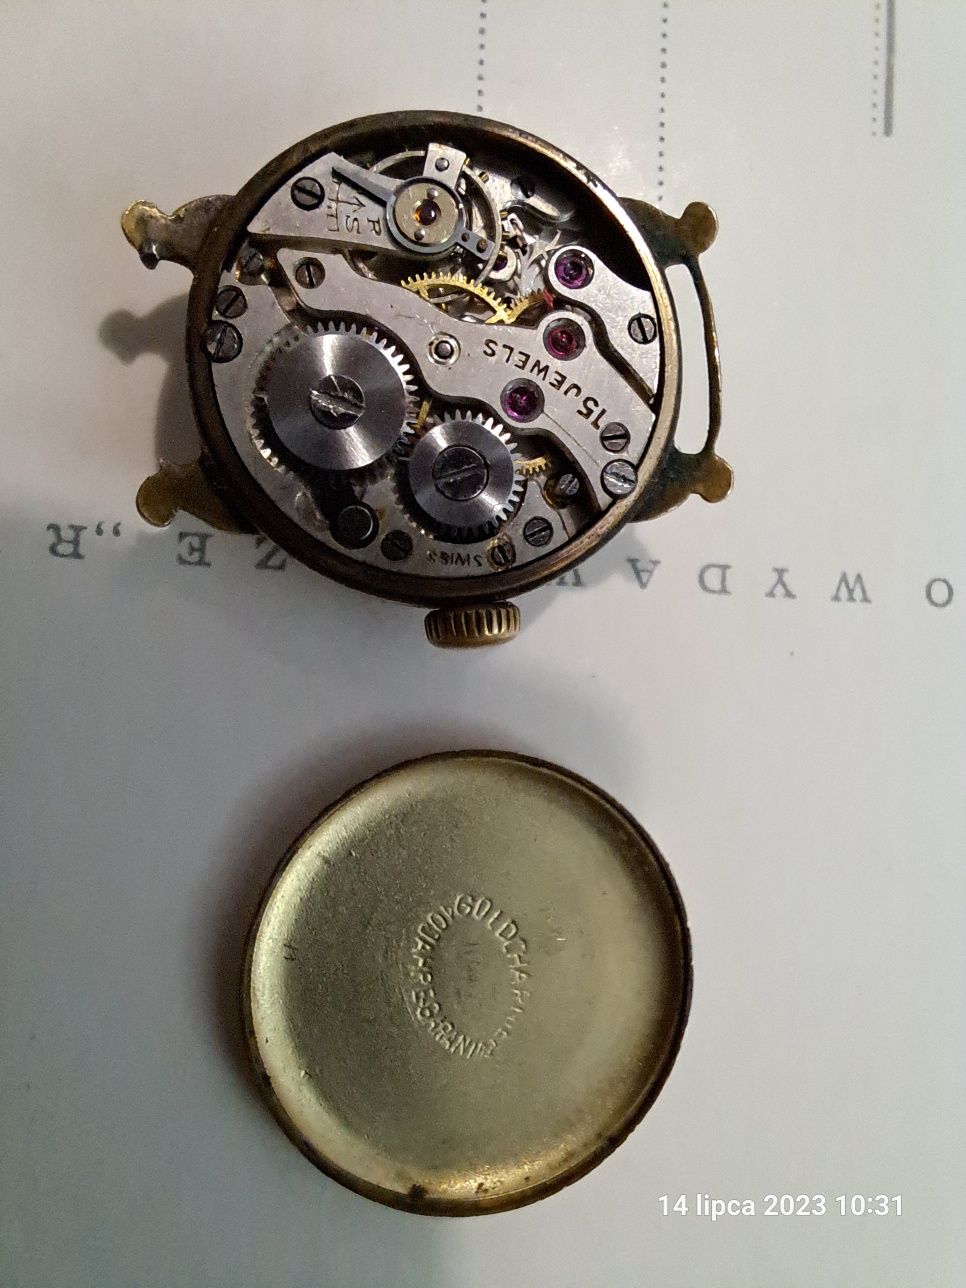 Sprzedam stary zegarek BELLARIA